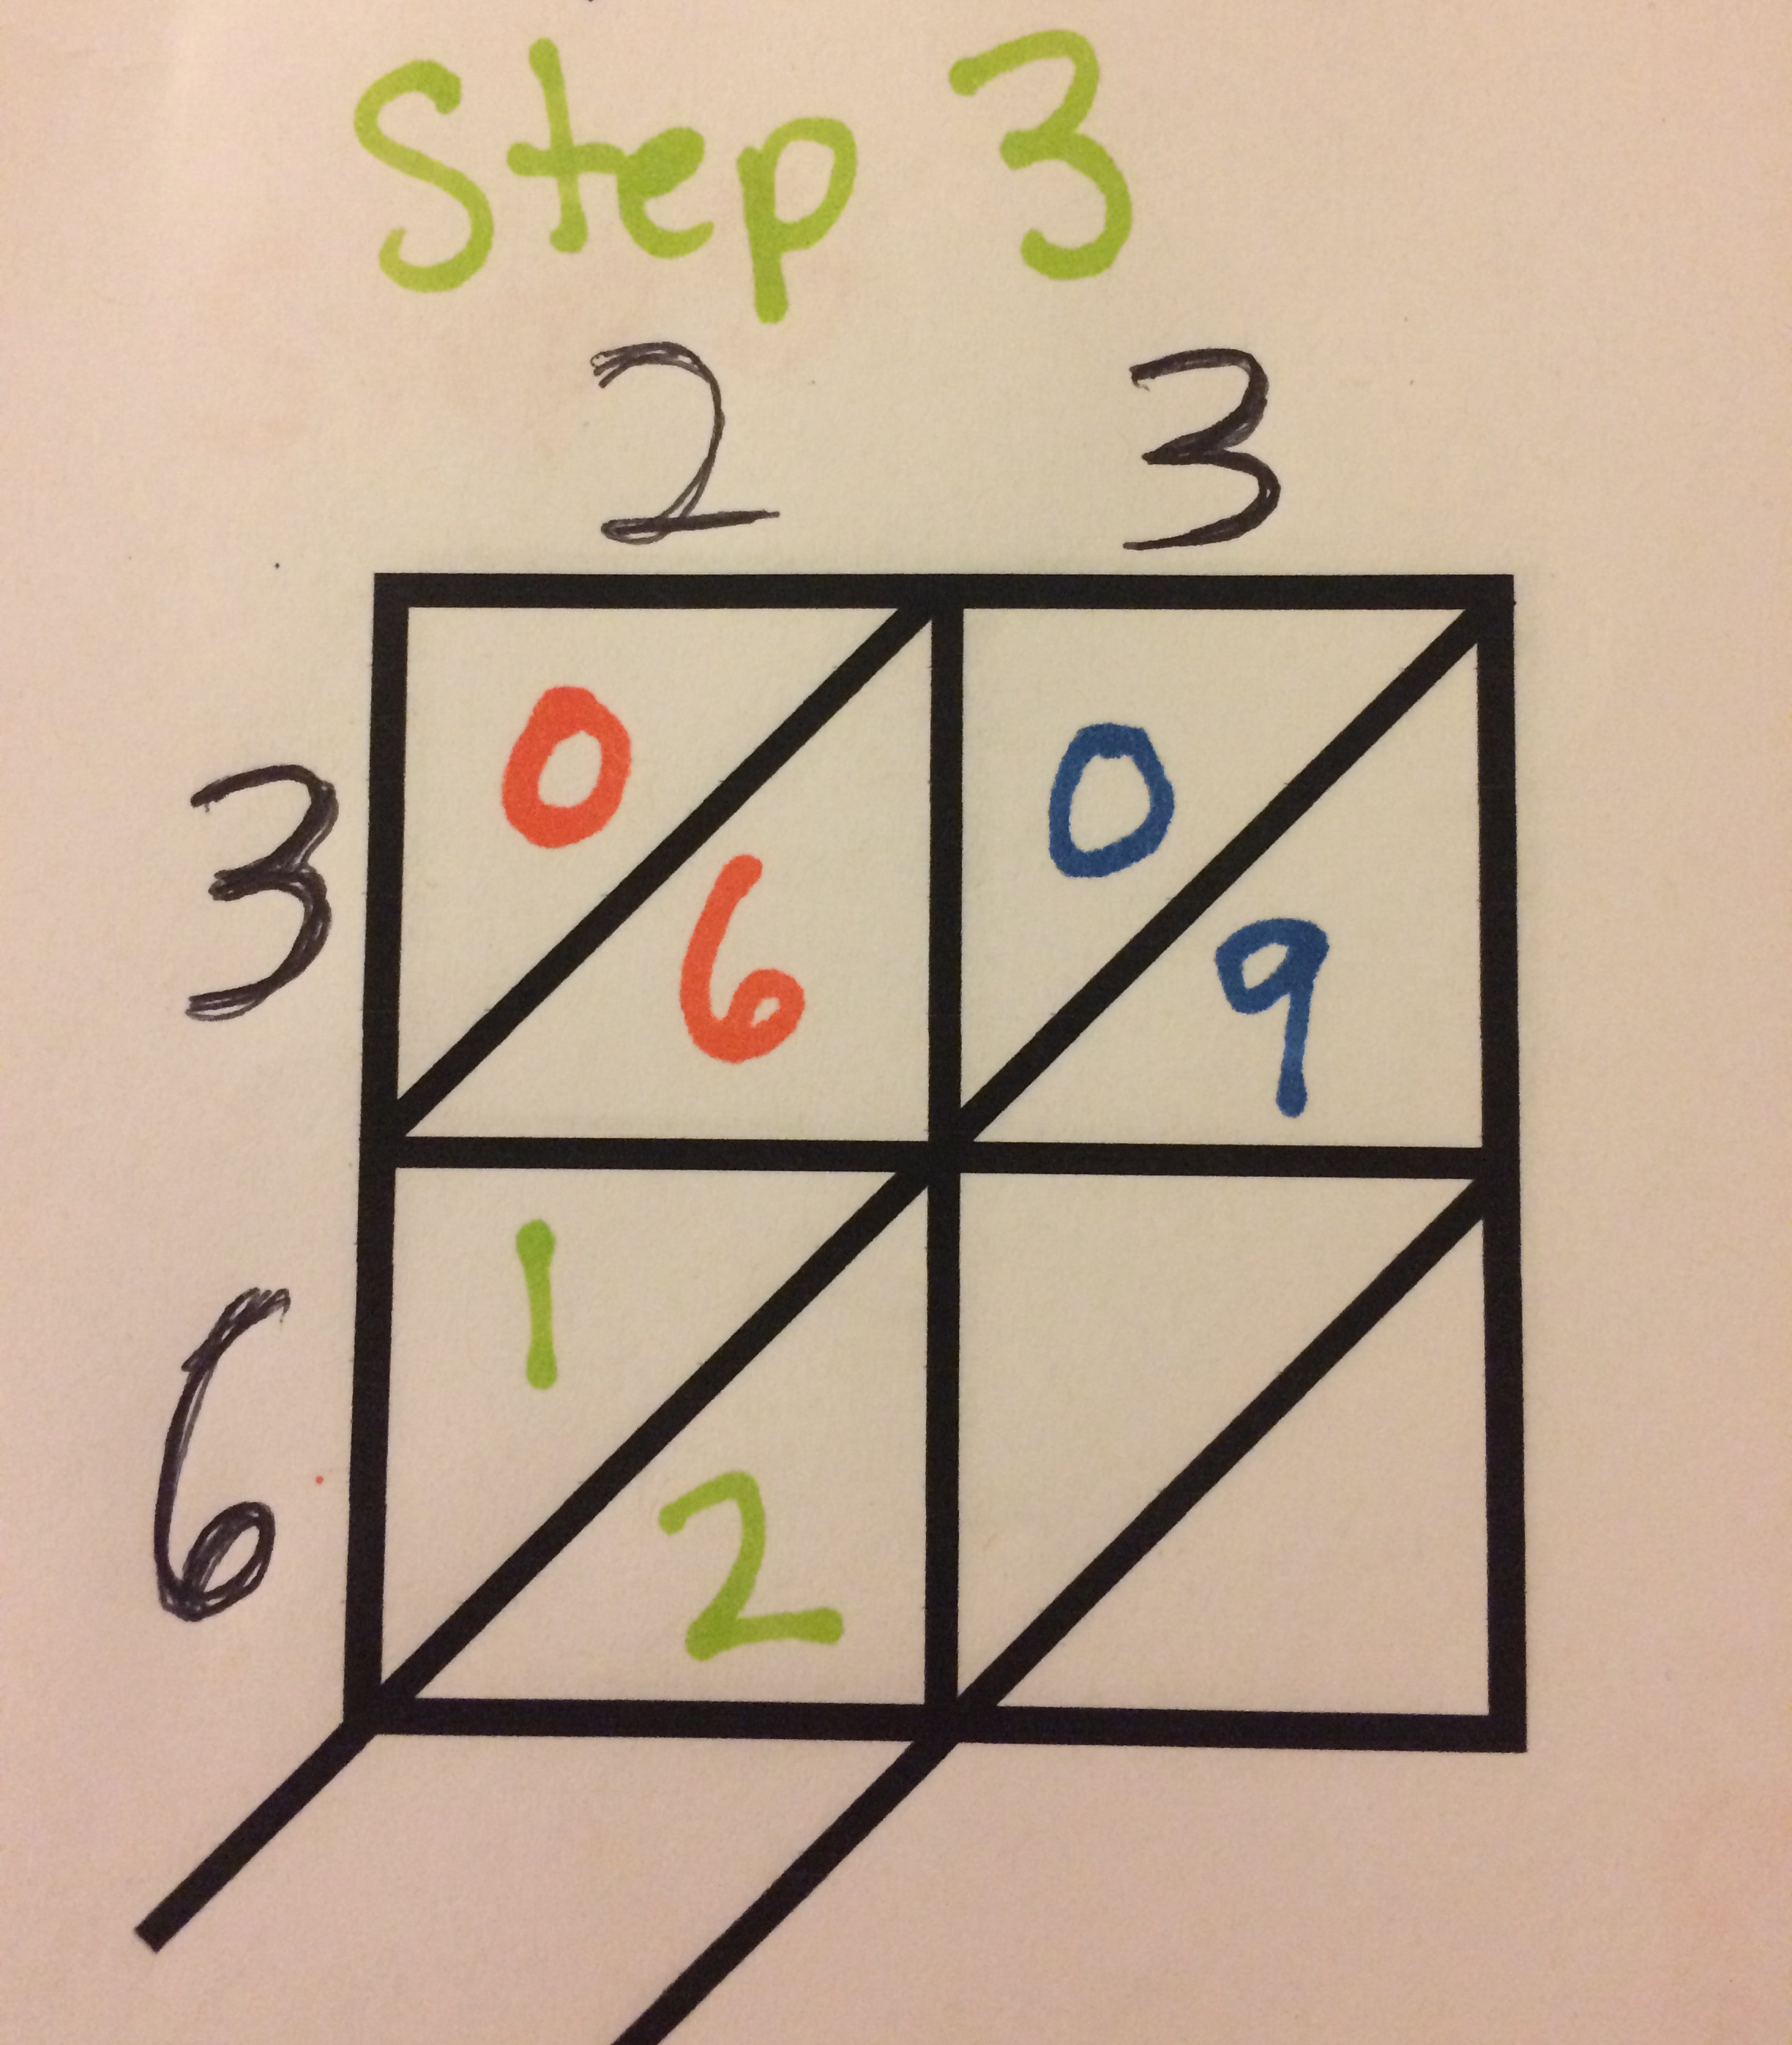 Lattice Multiplication step by step step 3 